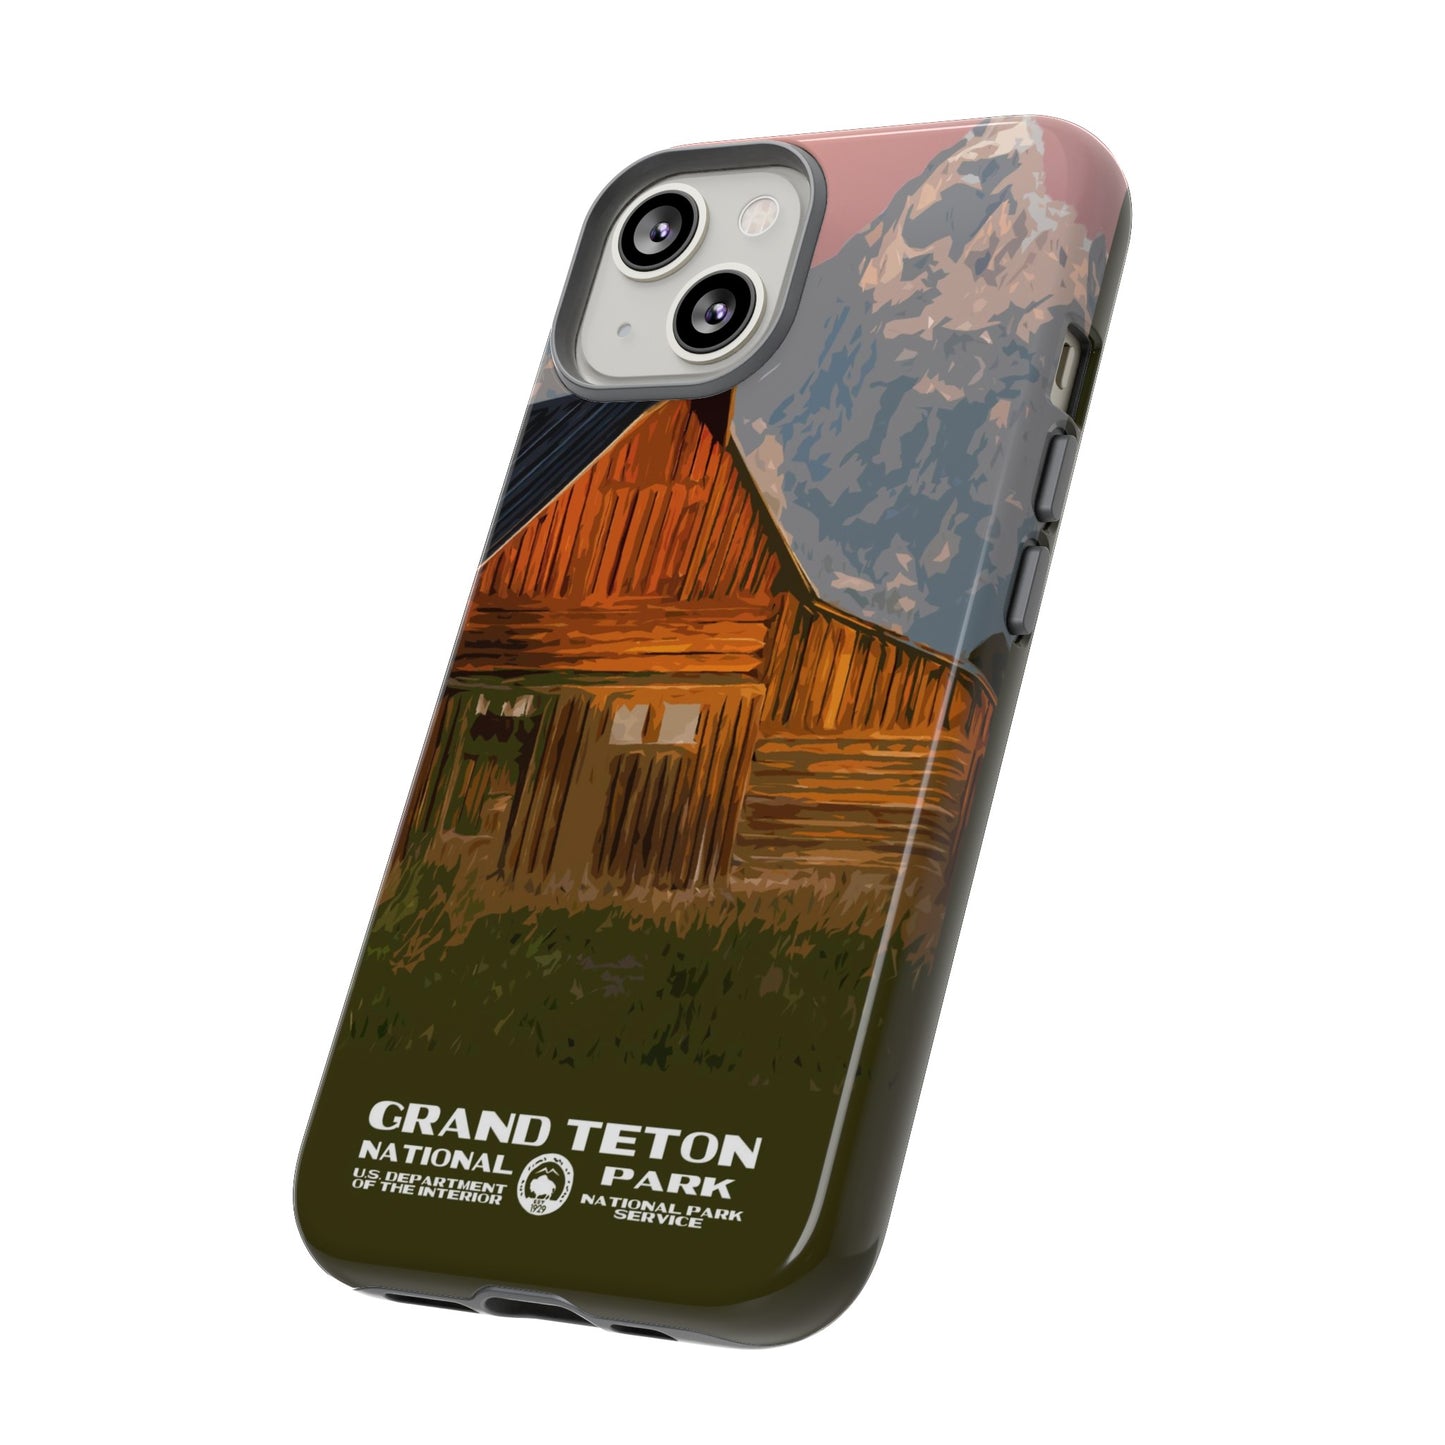 Grand Teton National Park Phone Case - Moulton Park